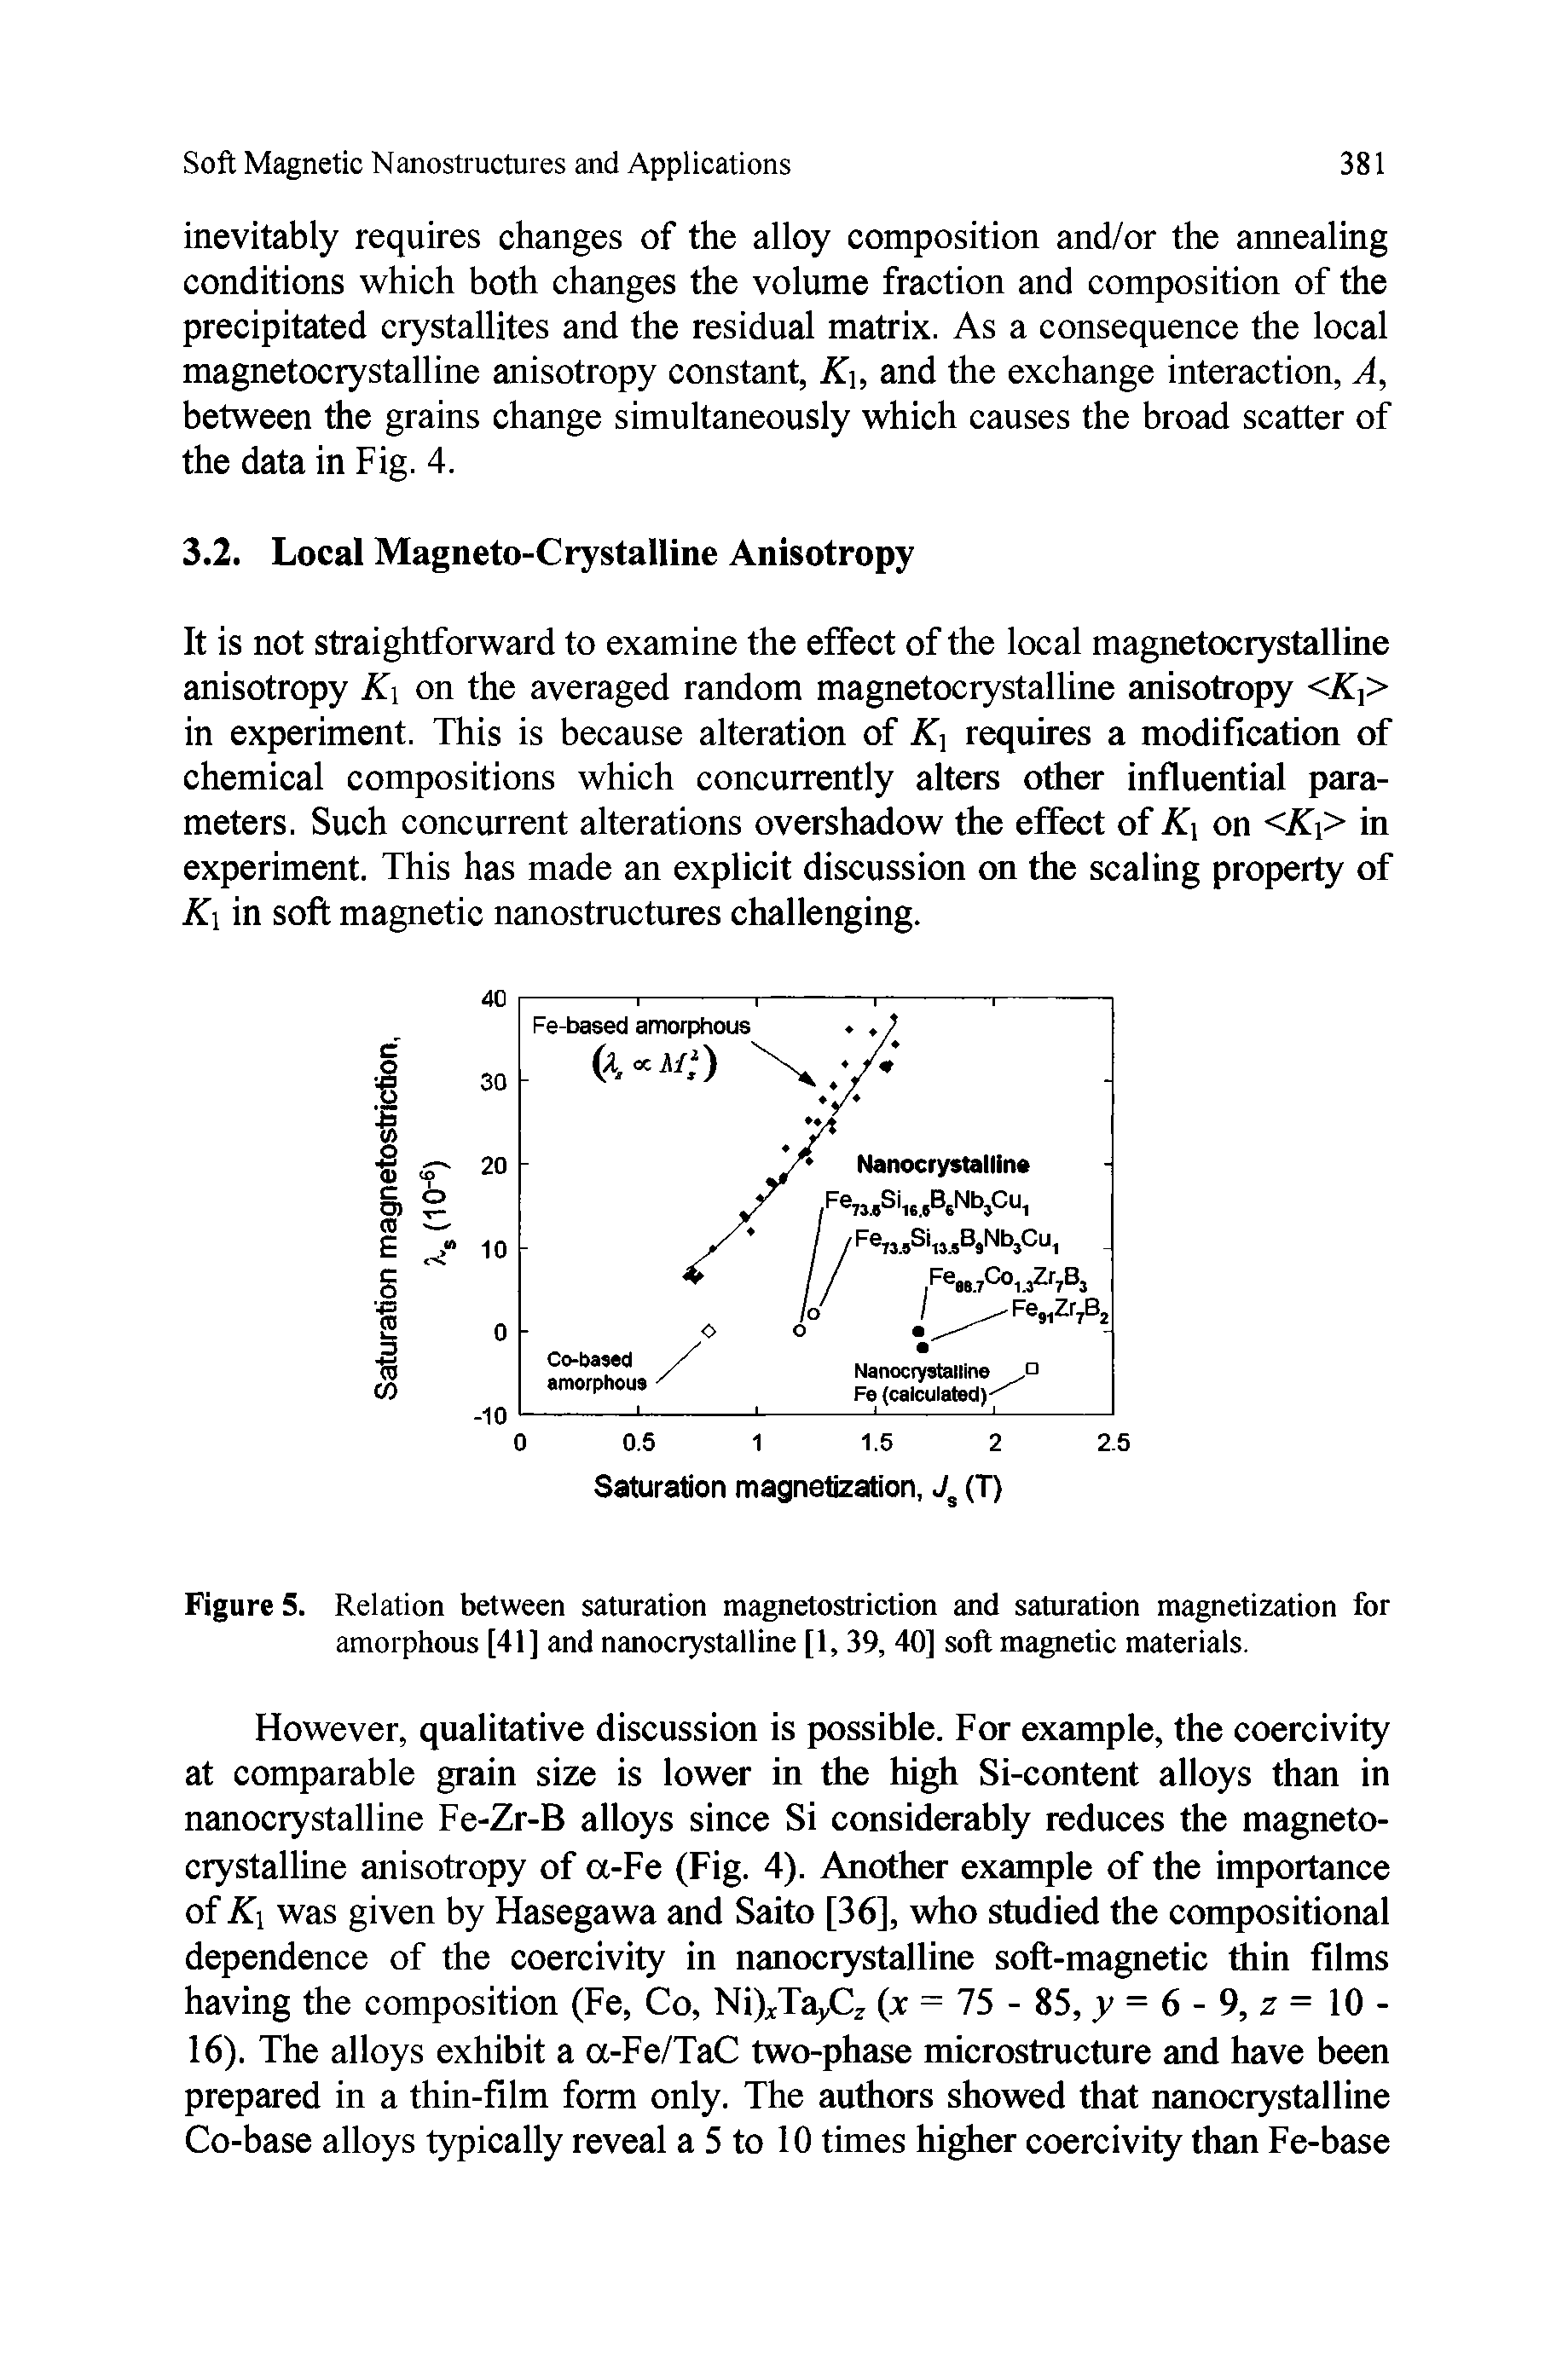 Figure 5. Relation between saturation magnetostriction and saturation magnetization for amorphous [41] and nanocrystalline [1, 39, 40] soft magnetic materials.